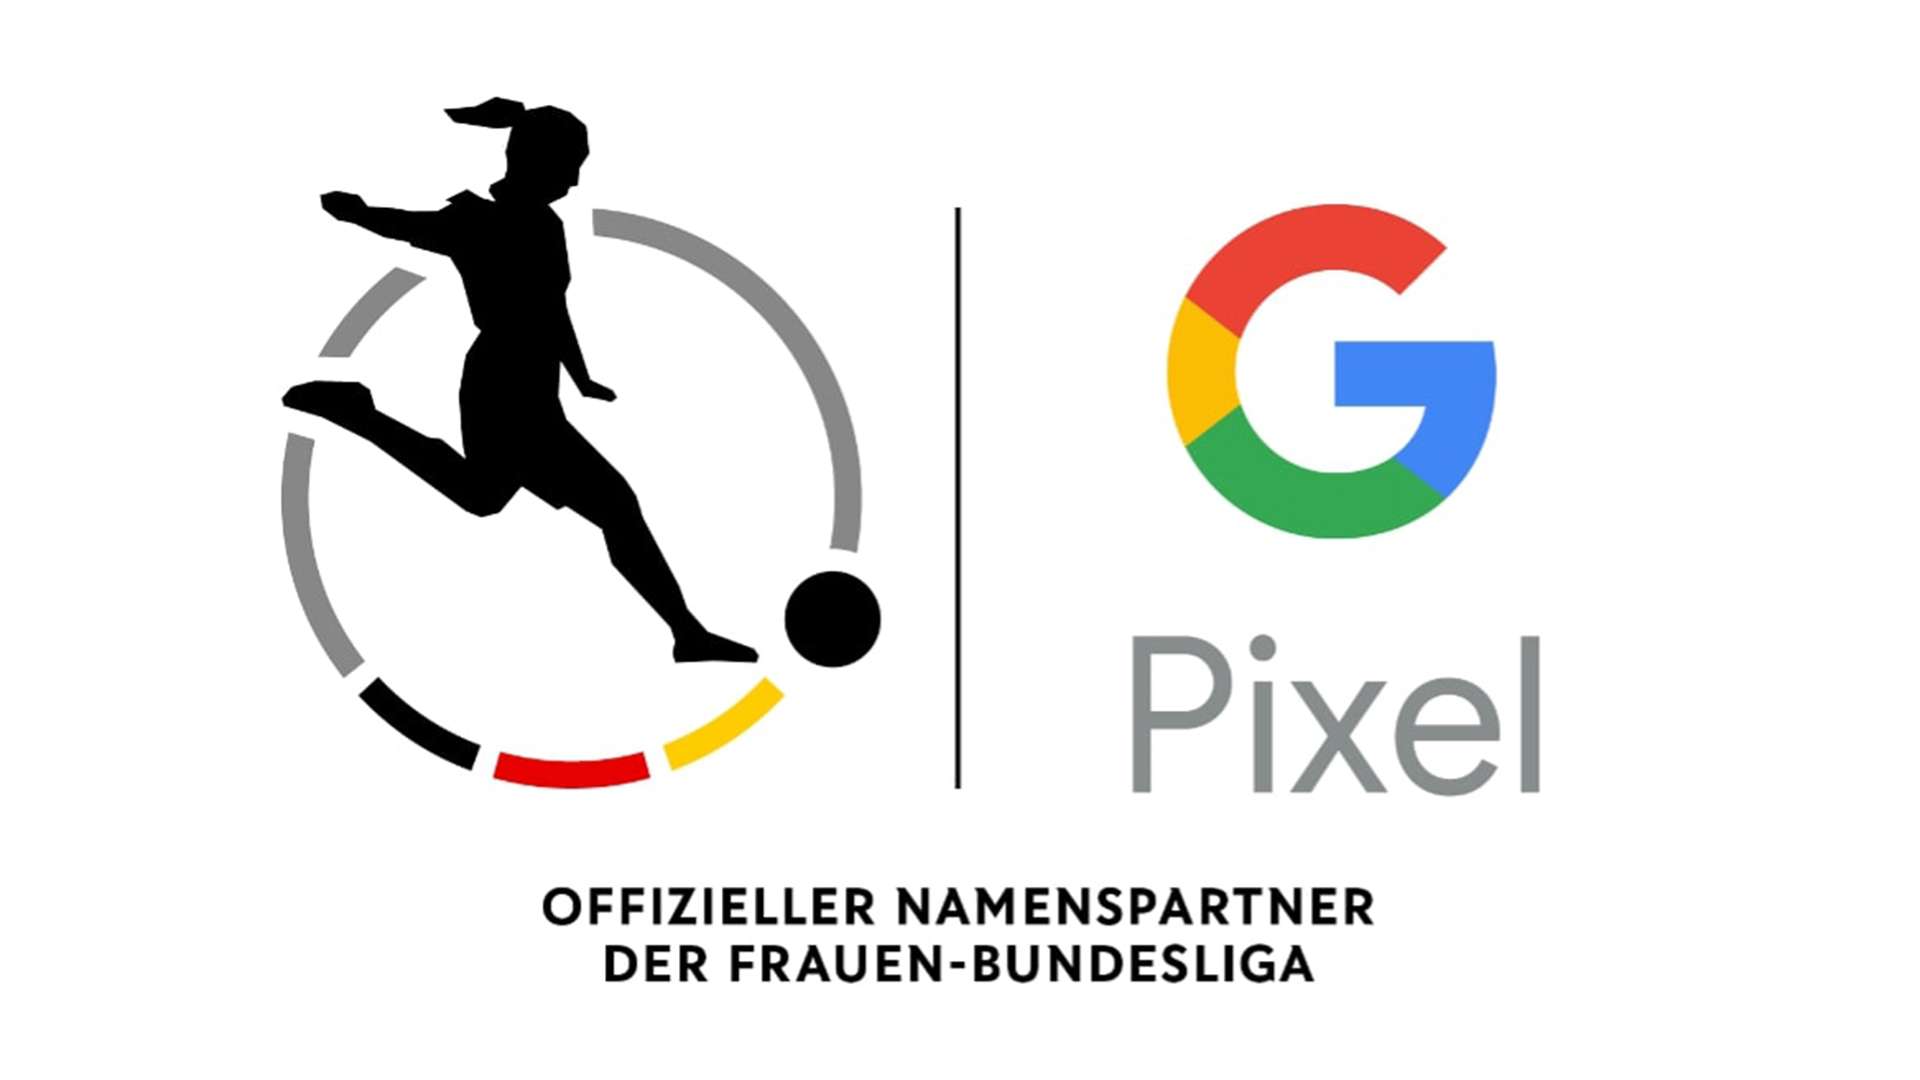 [Bild: Frauen_Bundesliga_Google_Pixel_1920px_525675_XL.jpg]